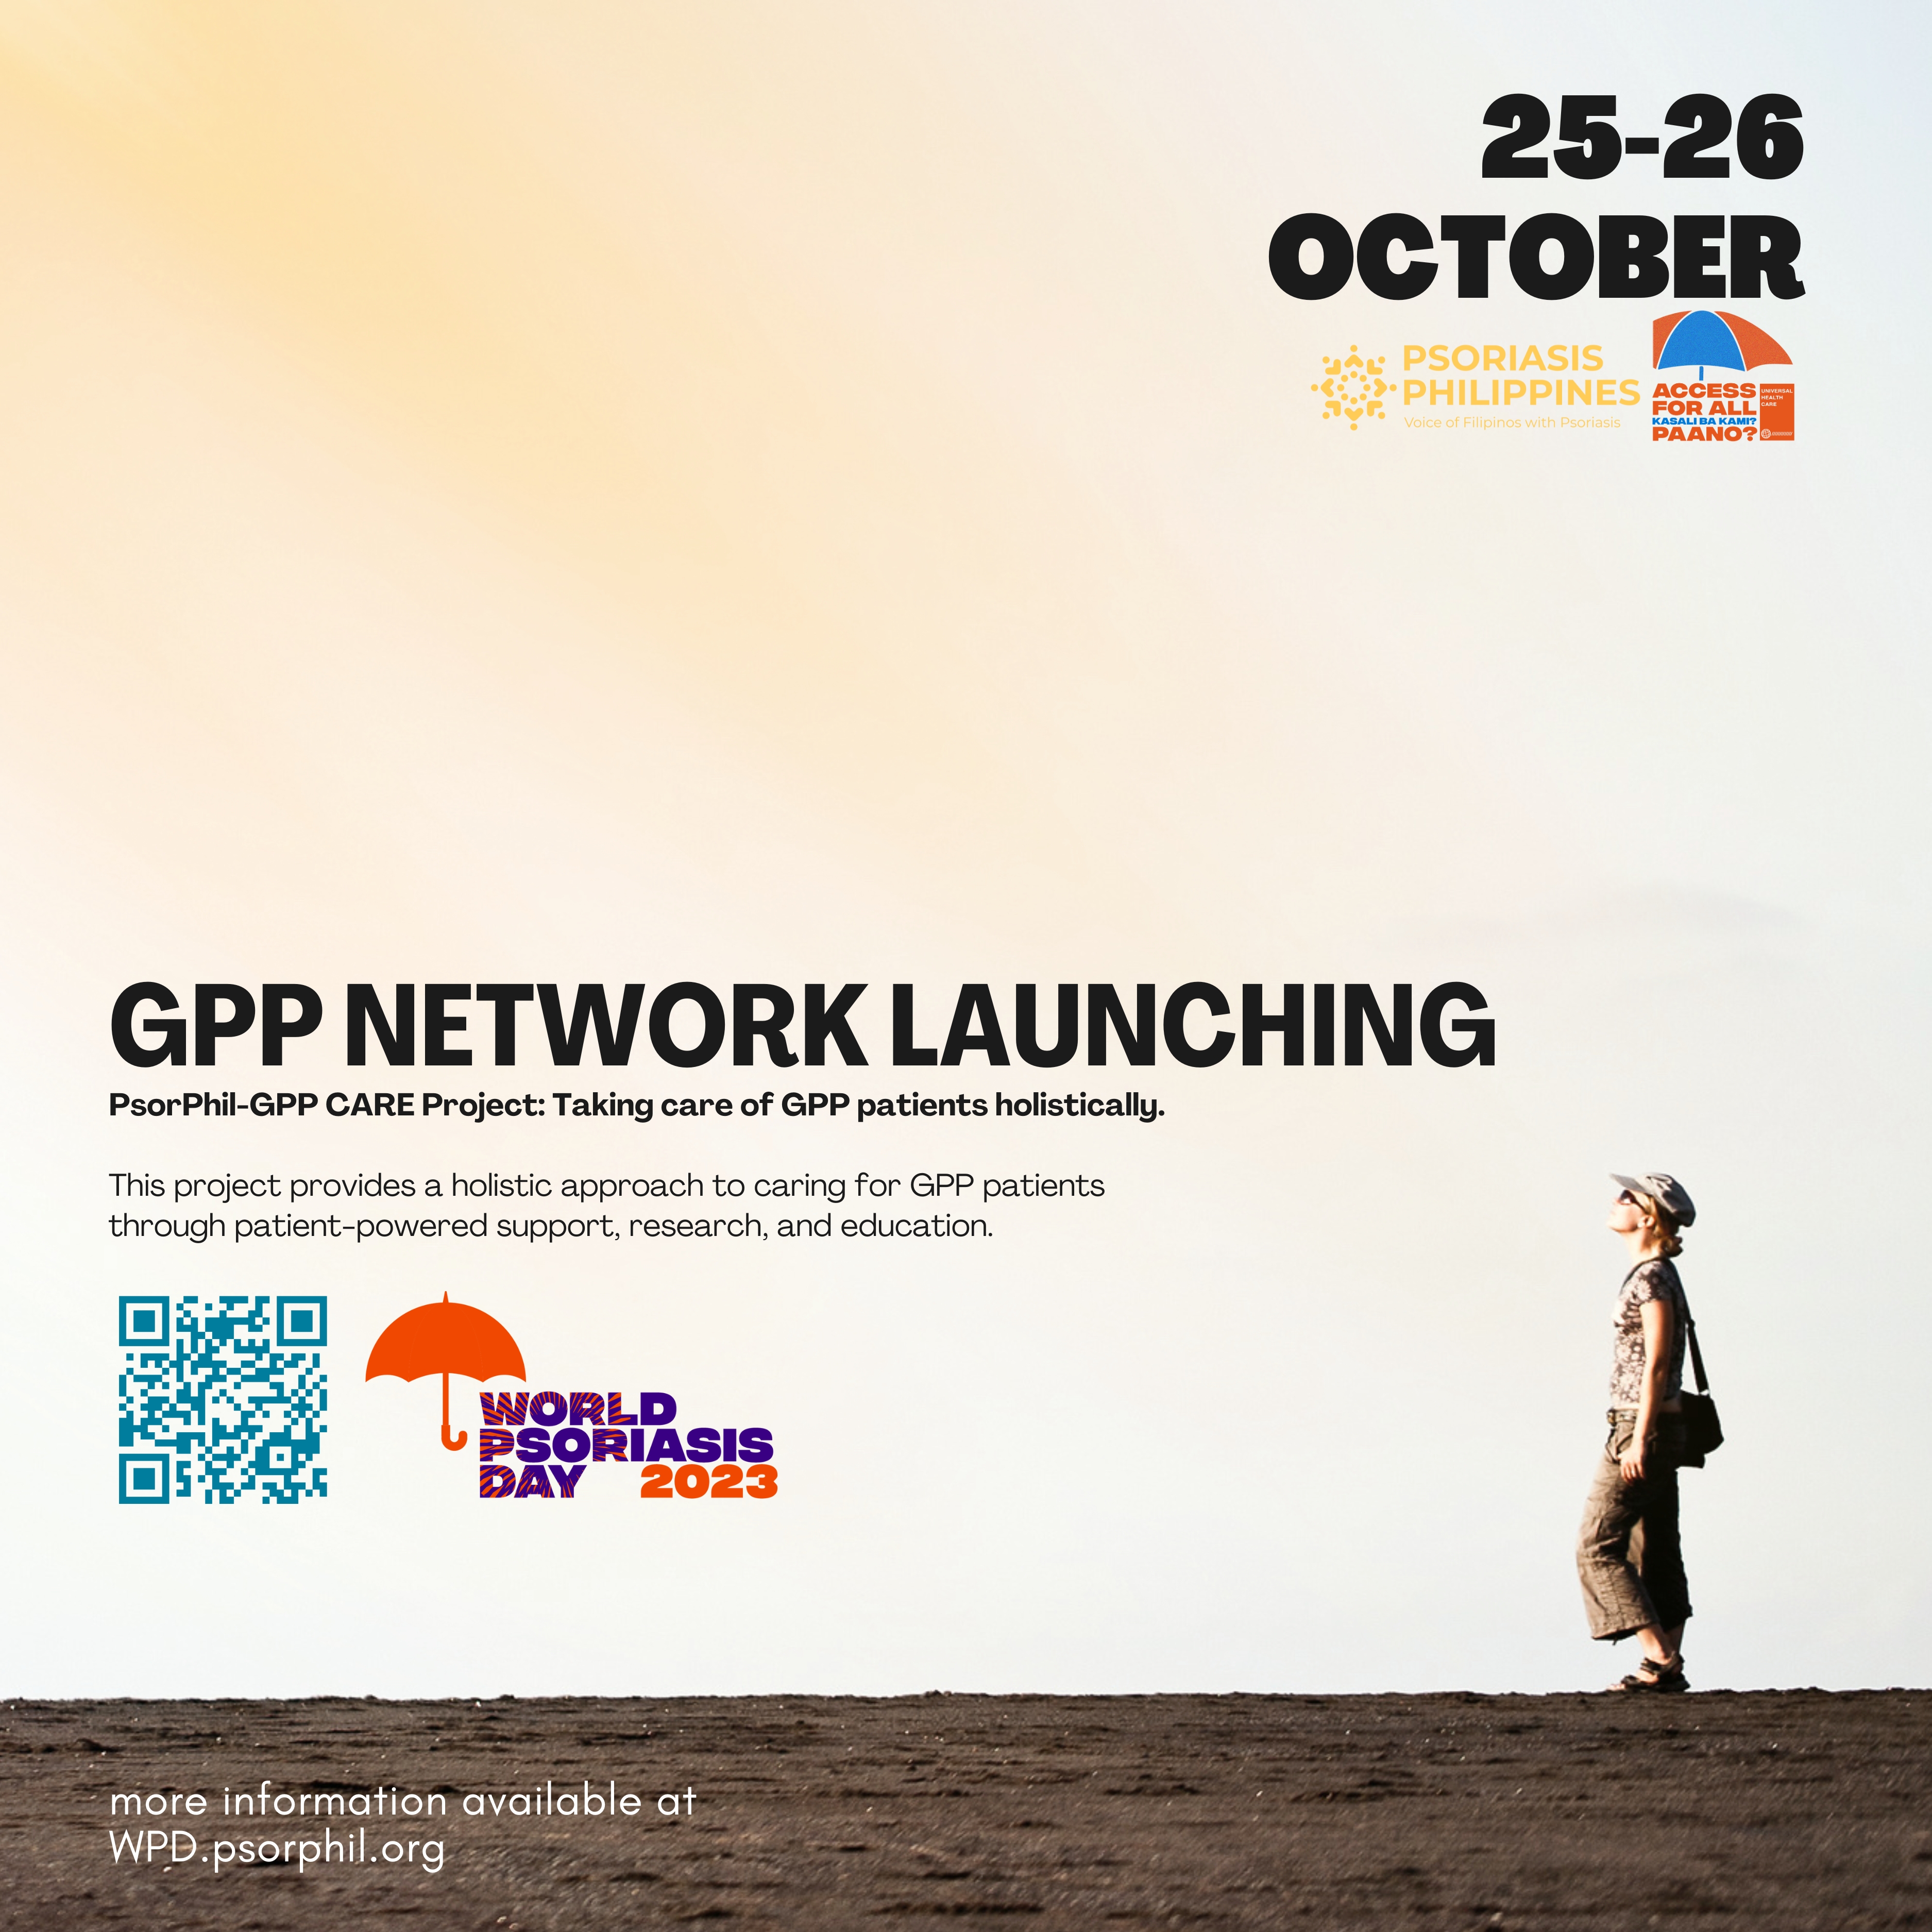 GPP Network Launching